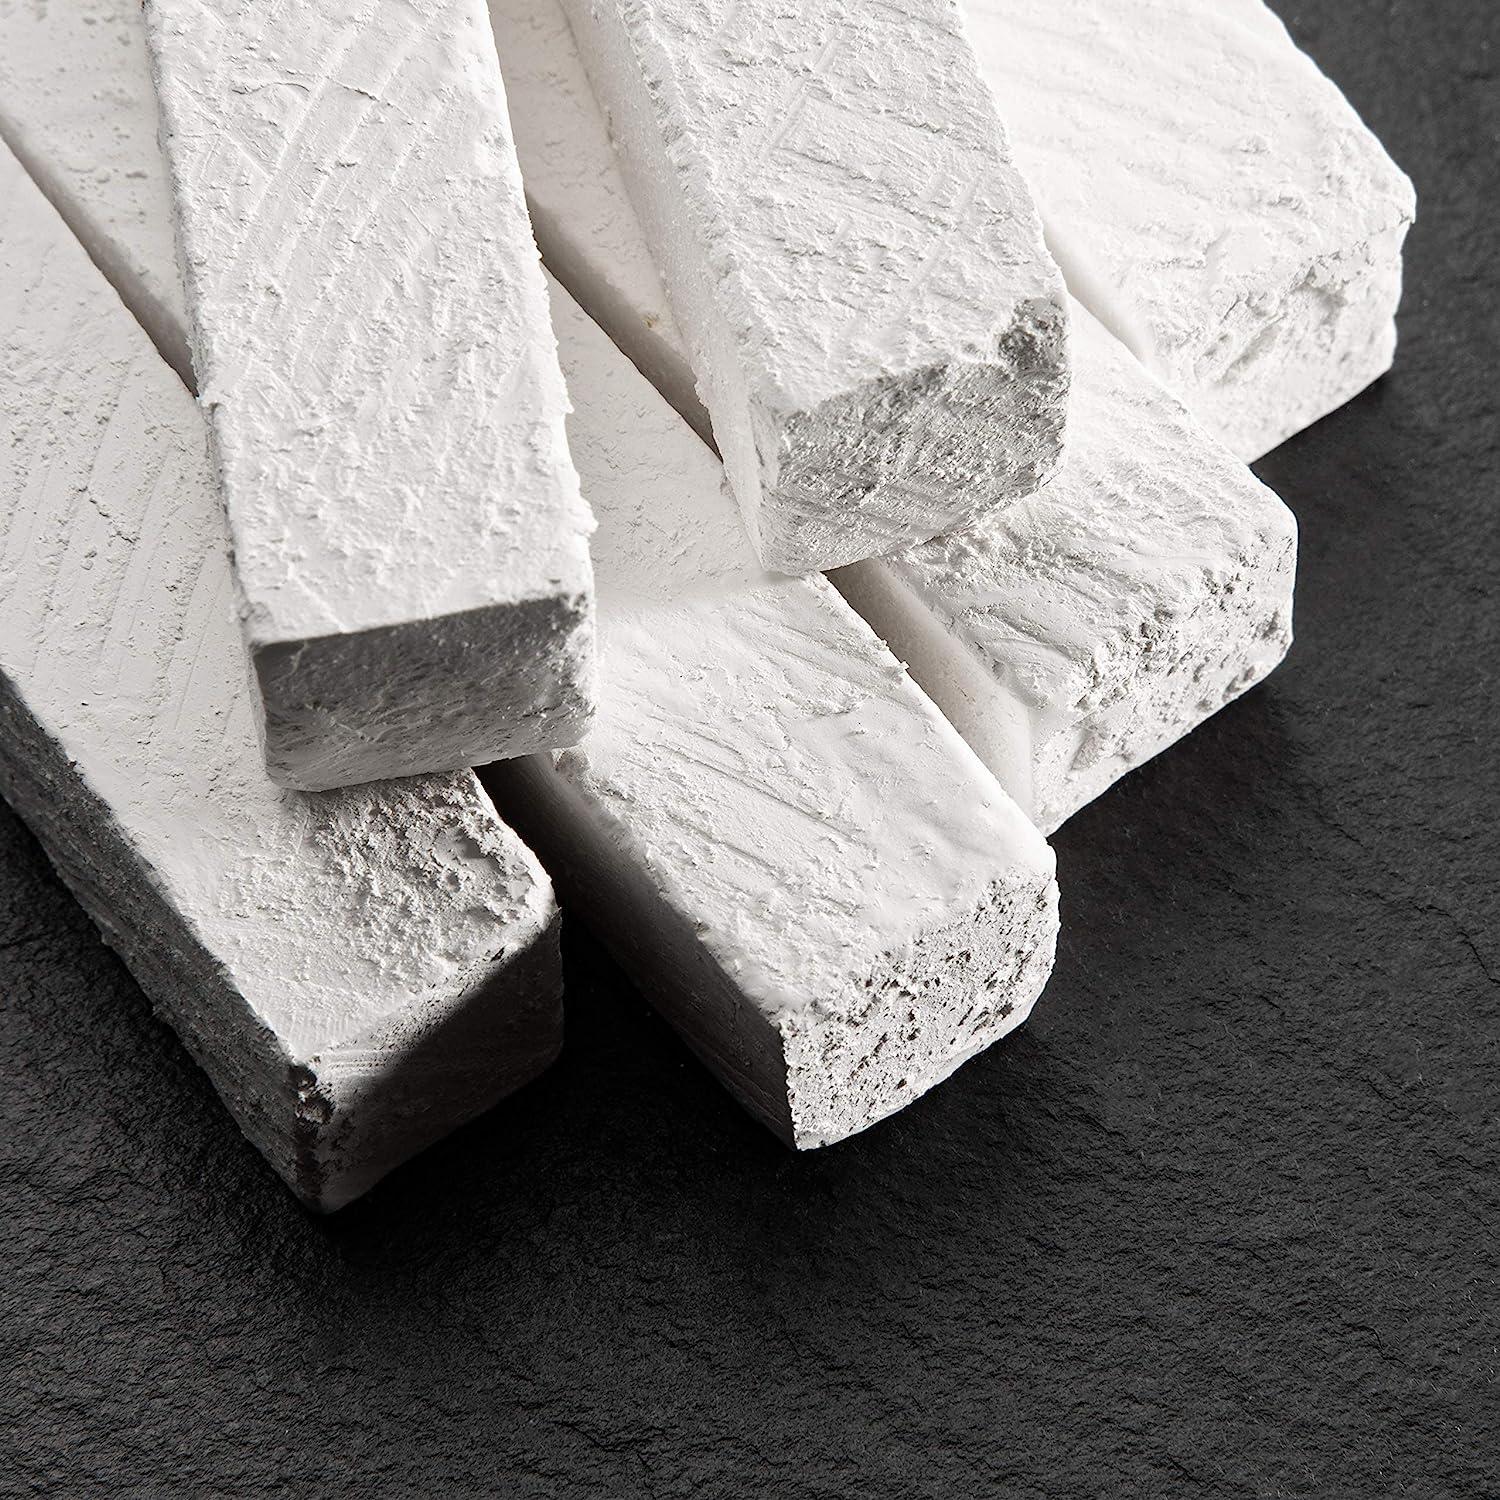 Hitt Premium Edible Chalk - Natural Belgorod Edible Chalk for Eating 7 oz (200 GR) - Zero Additives Organic Russian Edible Chalk Chunks - Asmr Food